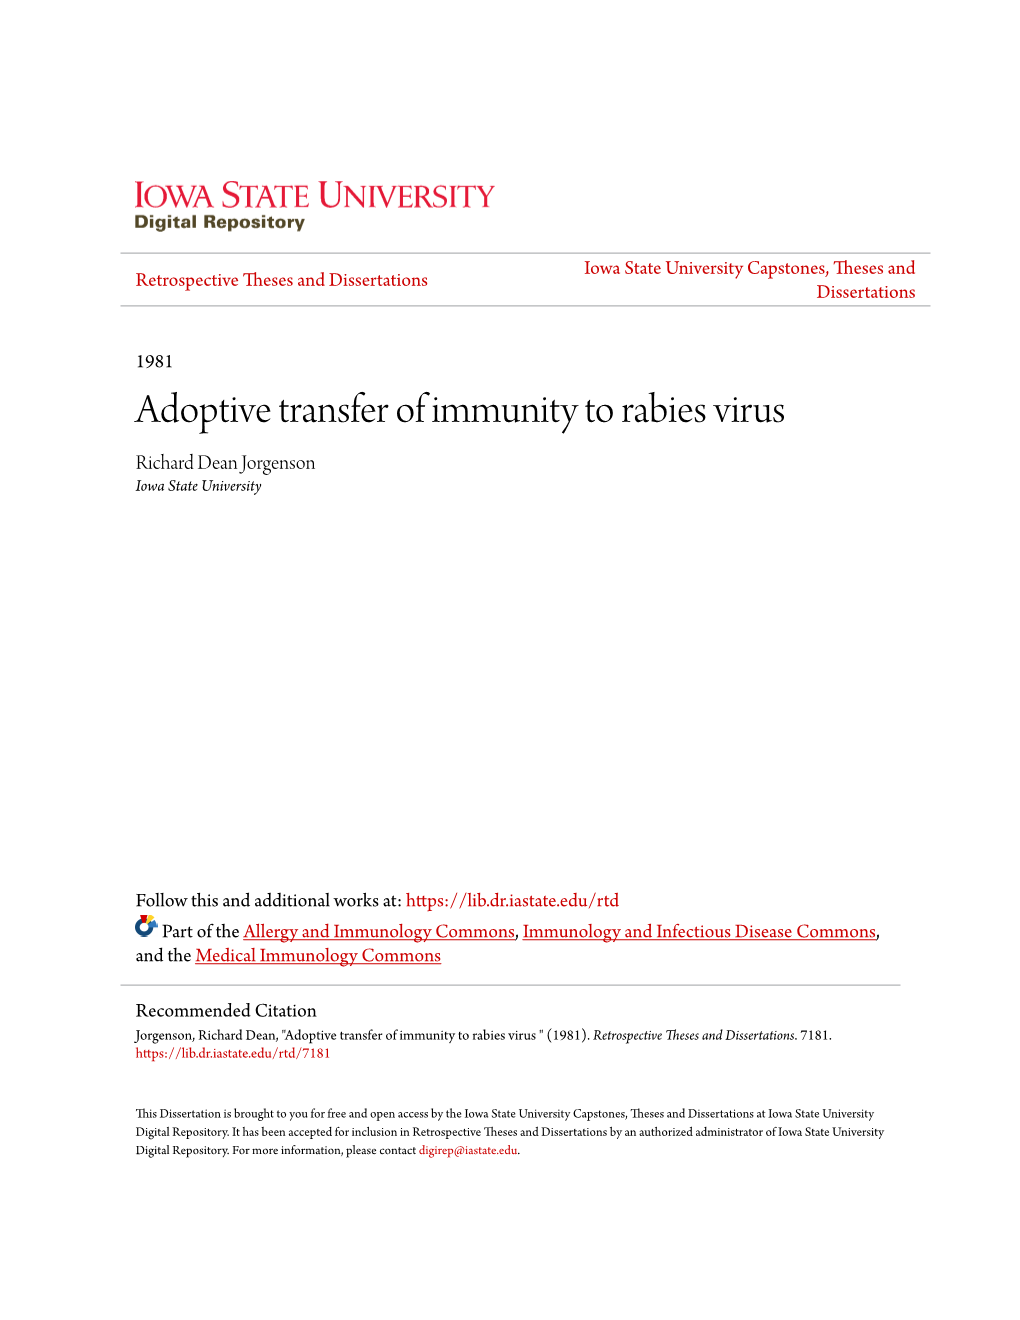 Adoptive Transfer of Immunity to Rabies Virus Richard Dean Jorgenson Iowa State University